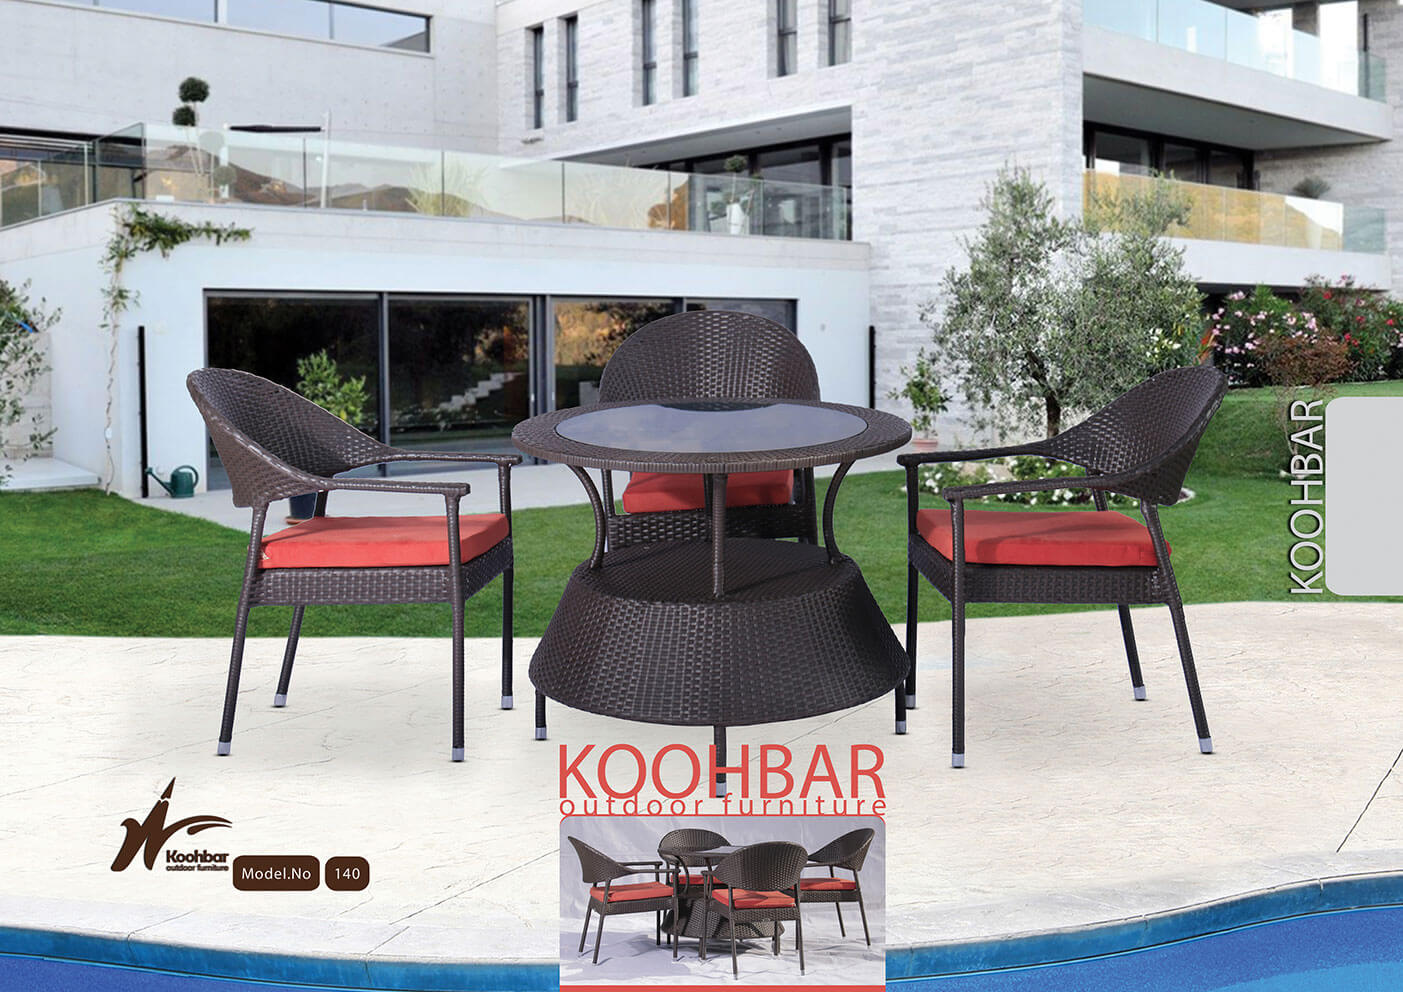 kohbar patio conversation sets 140 model0 - ست میز صندلی حصیری فضای باز کوهبر مدل ۱۴۰ -  - patio-dining-furniture